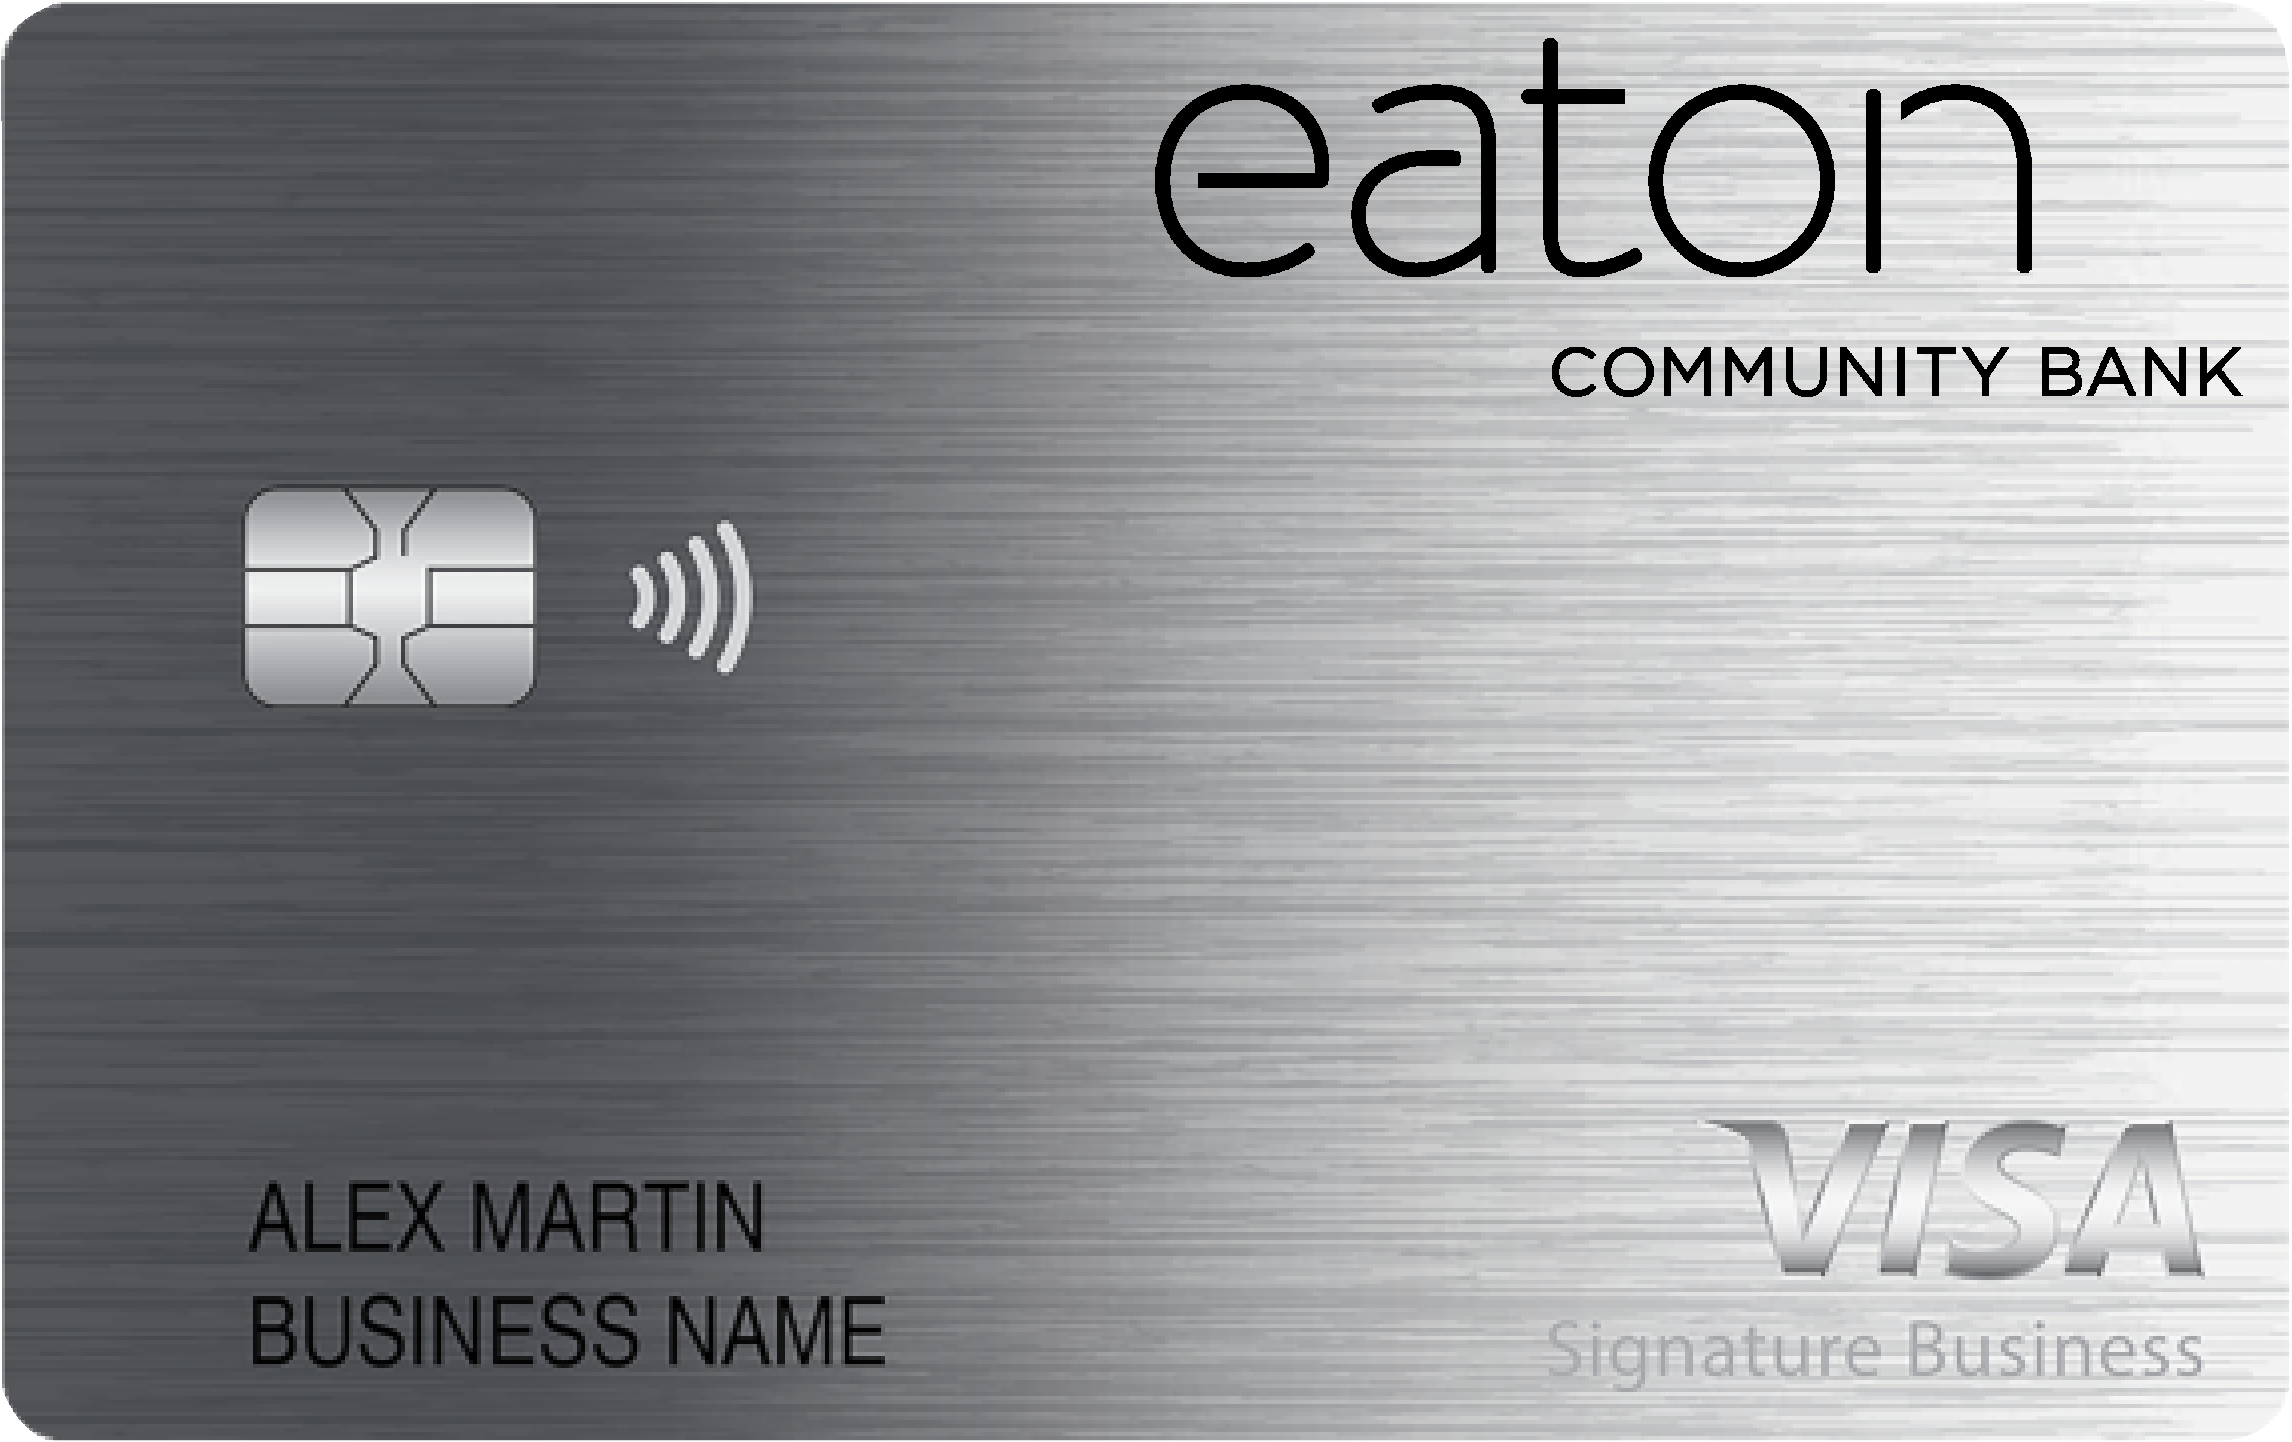 Eaton Community Bank Smart Business Rewards Card